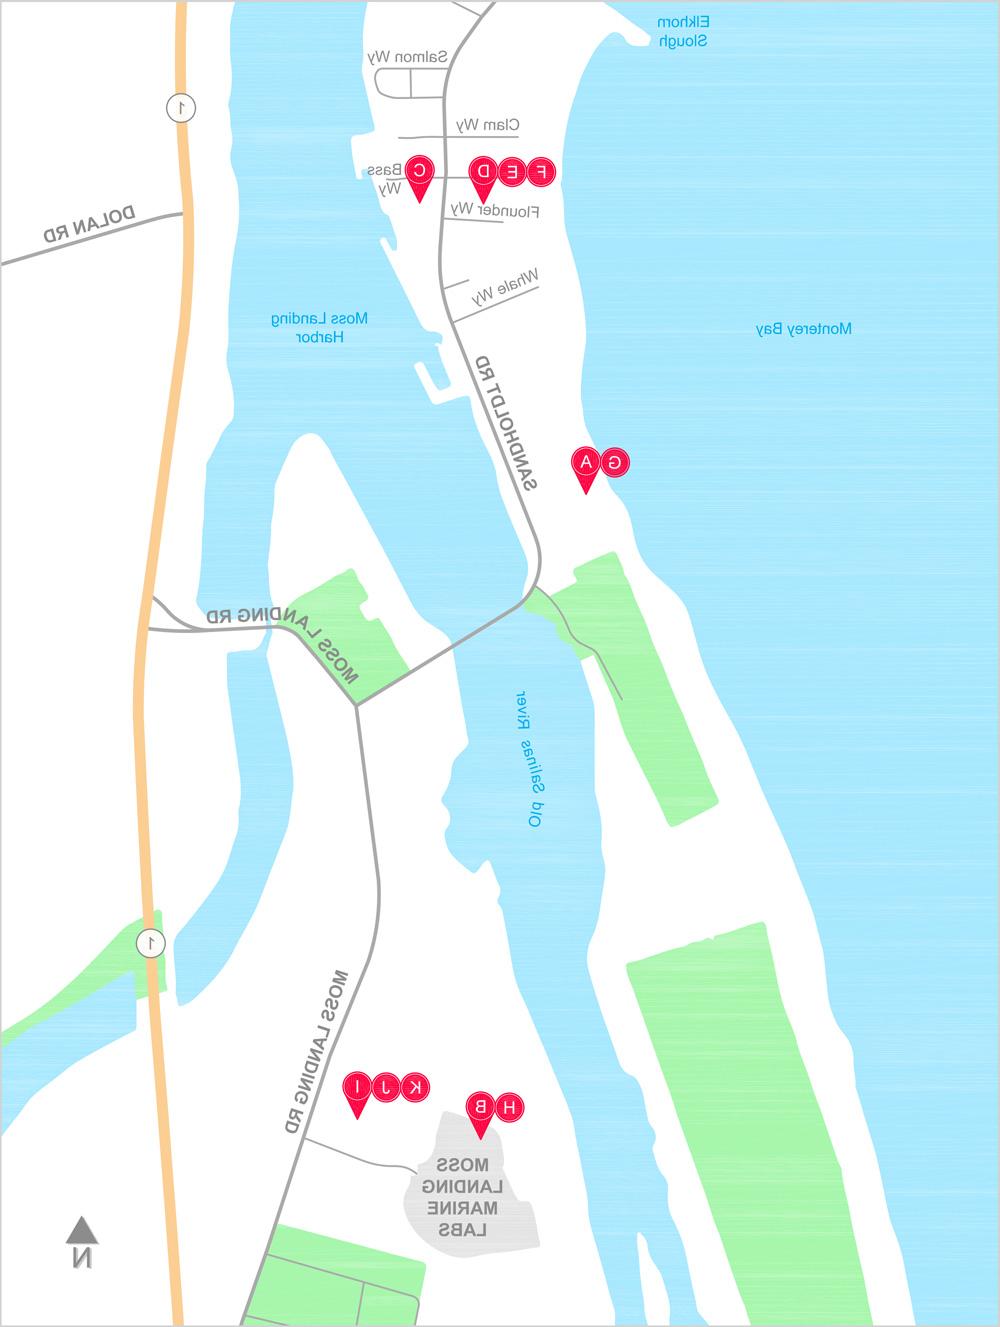 Map of Moss Landing facilities.